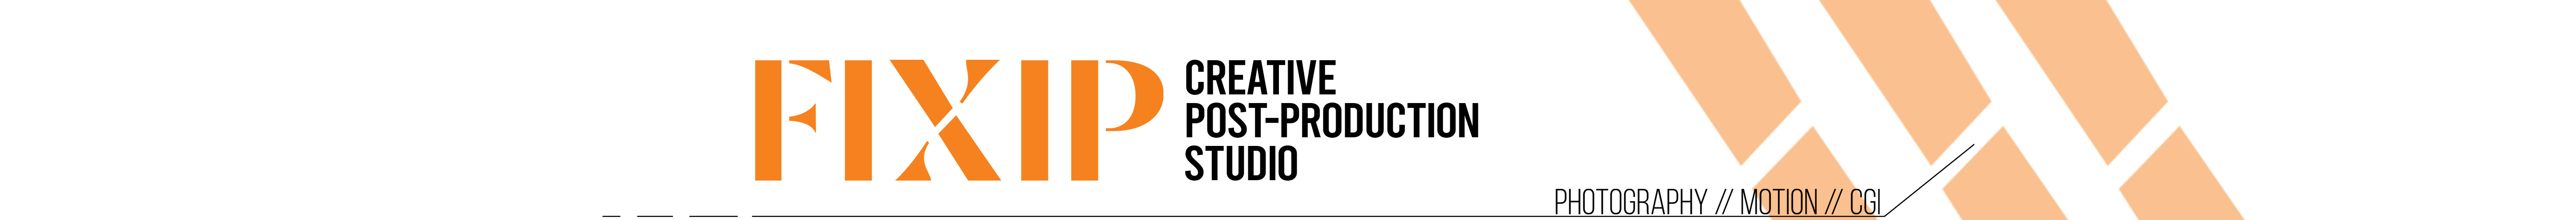 FIXIP Studio's profile banner